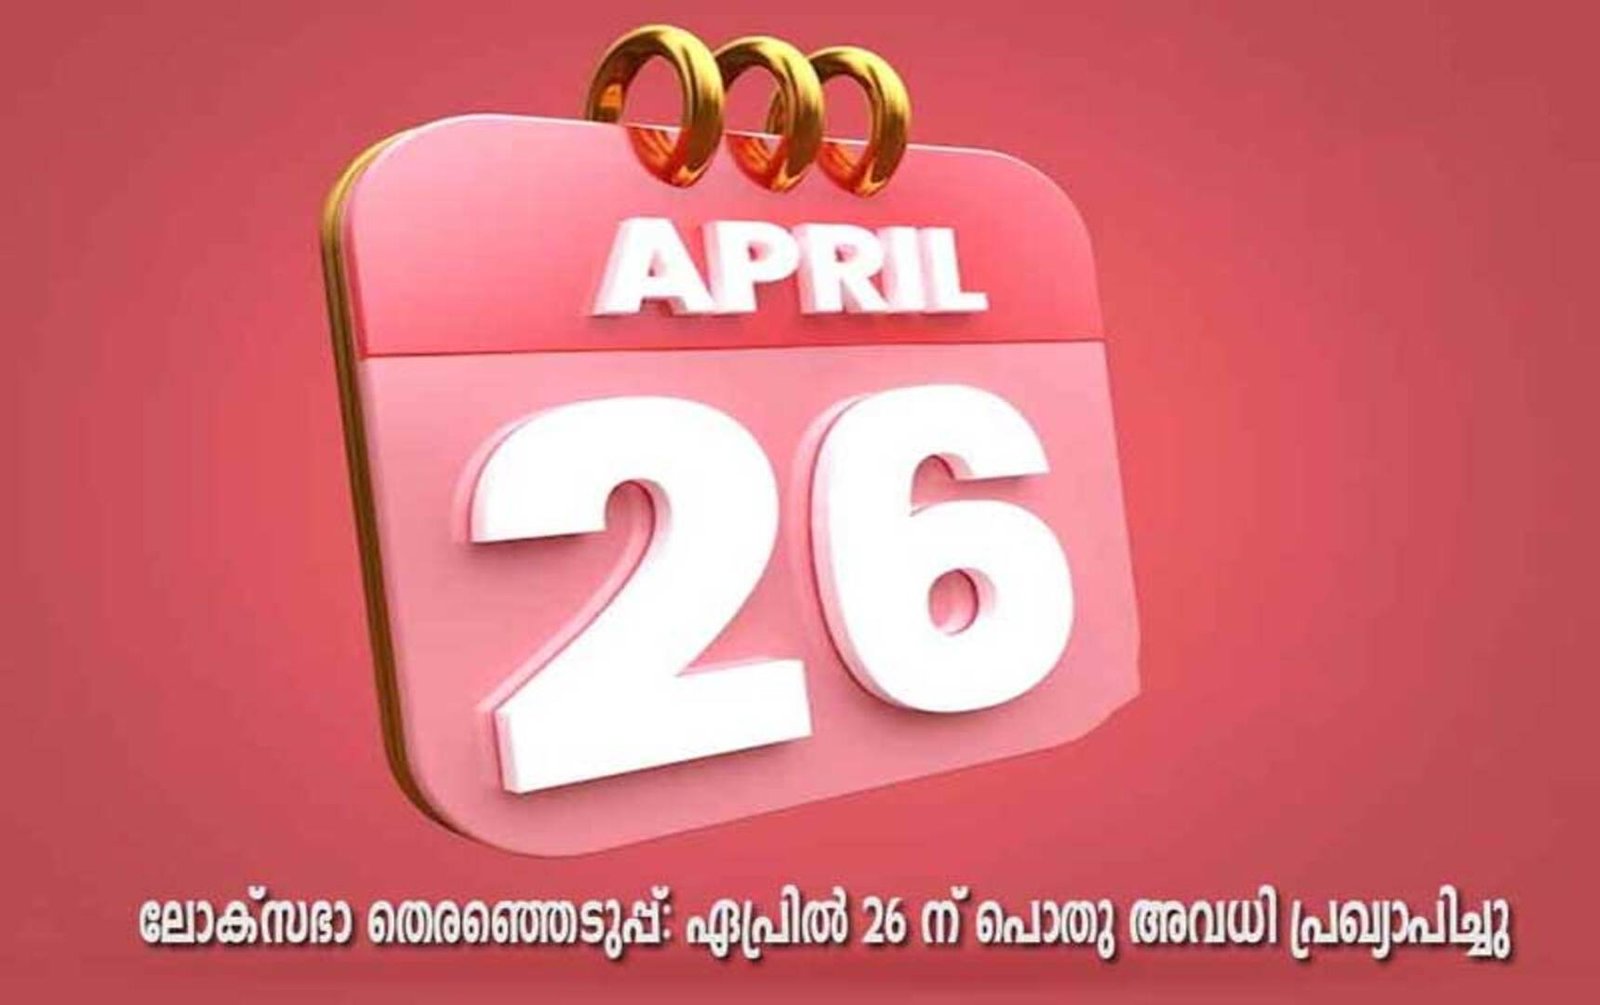 Lok Sabha Elections: April 26 is a public holiday